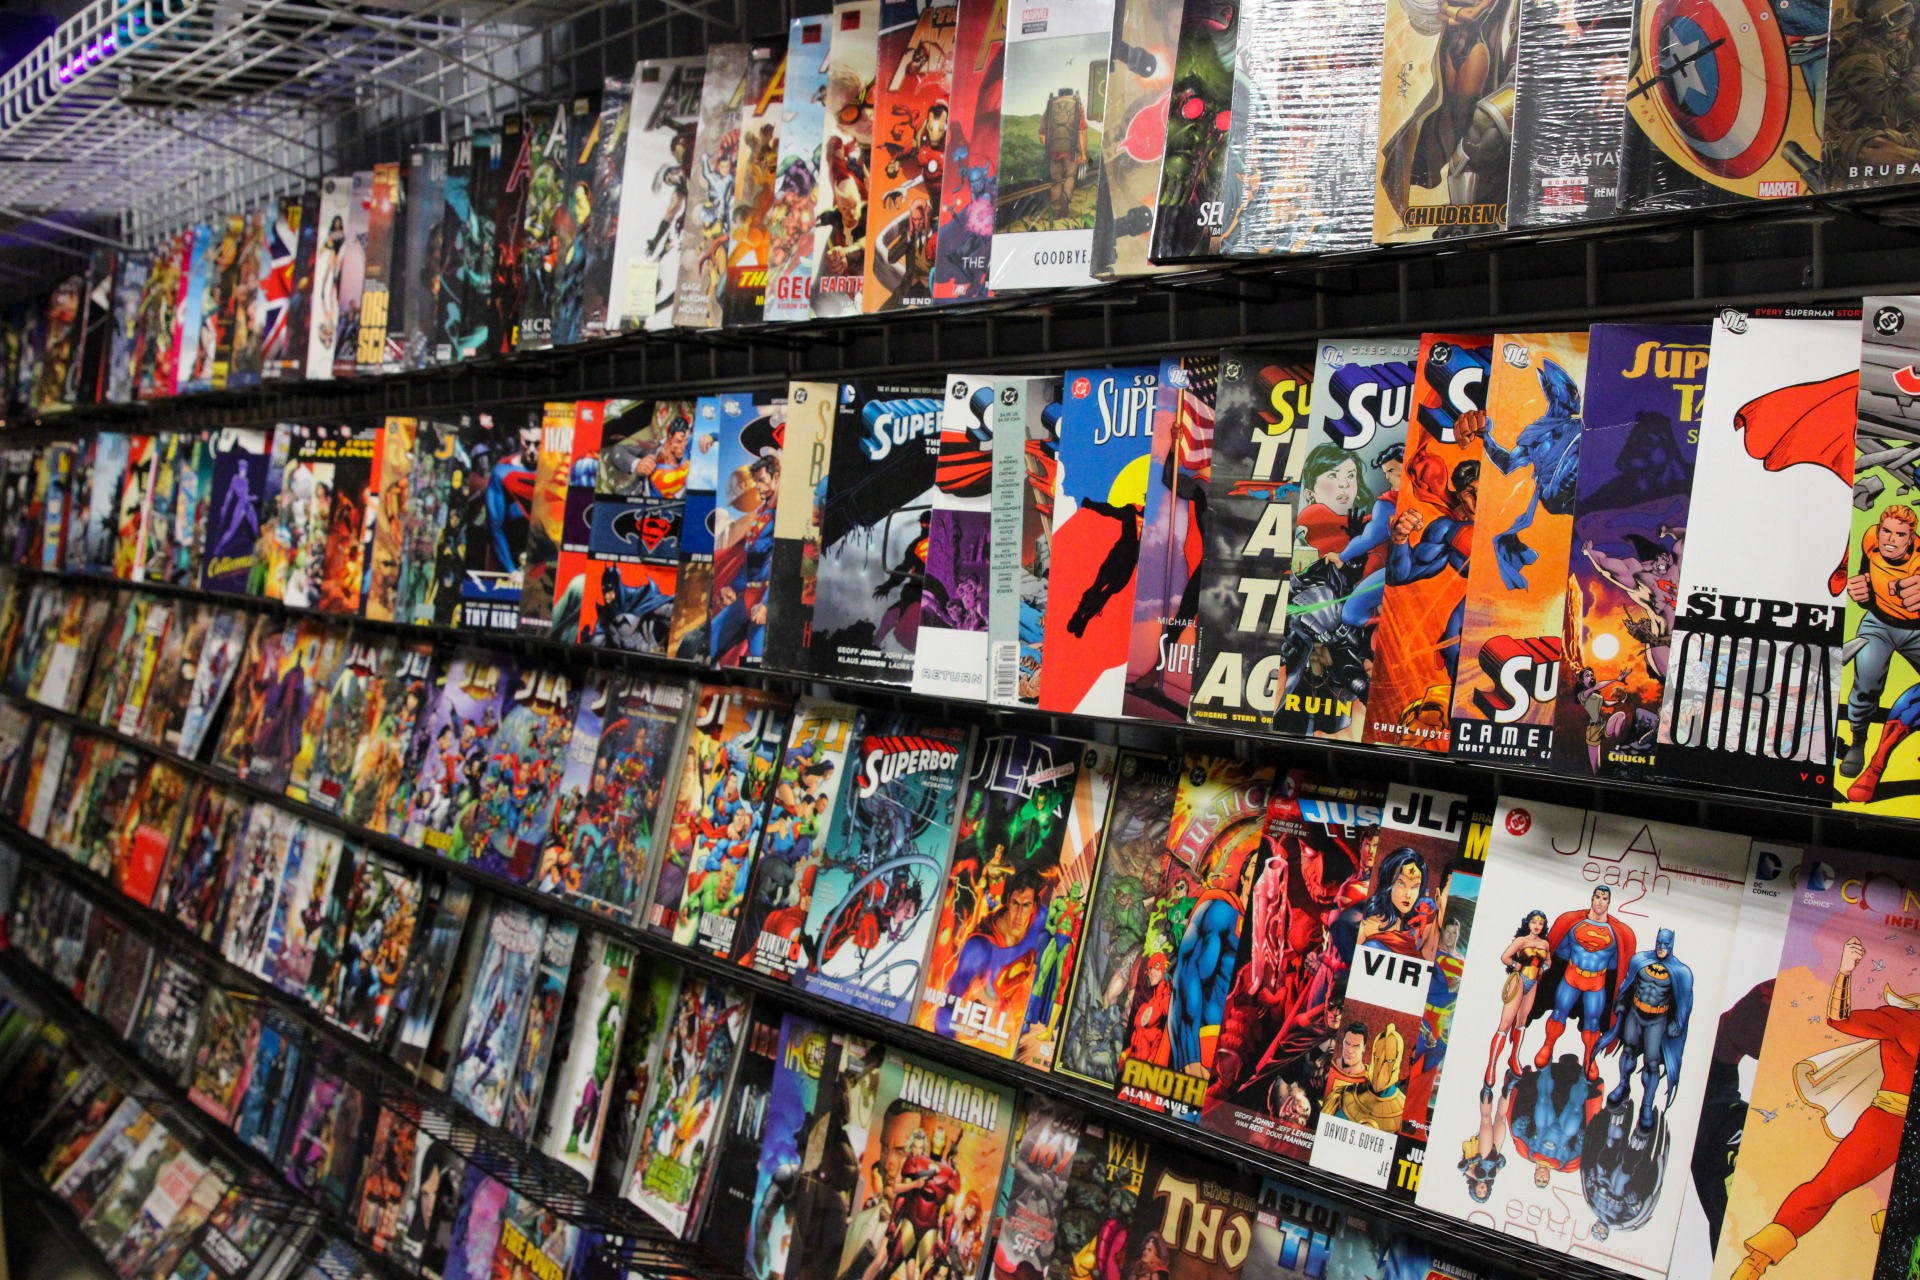 Spud's Emporium of Comics and Games